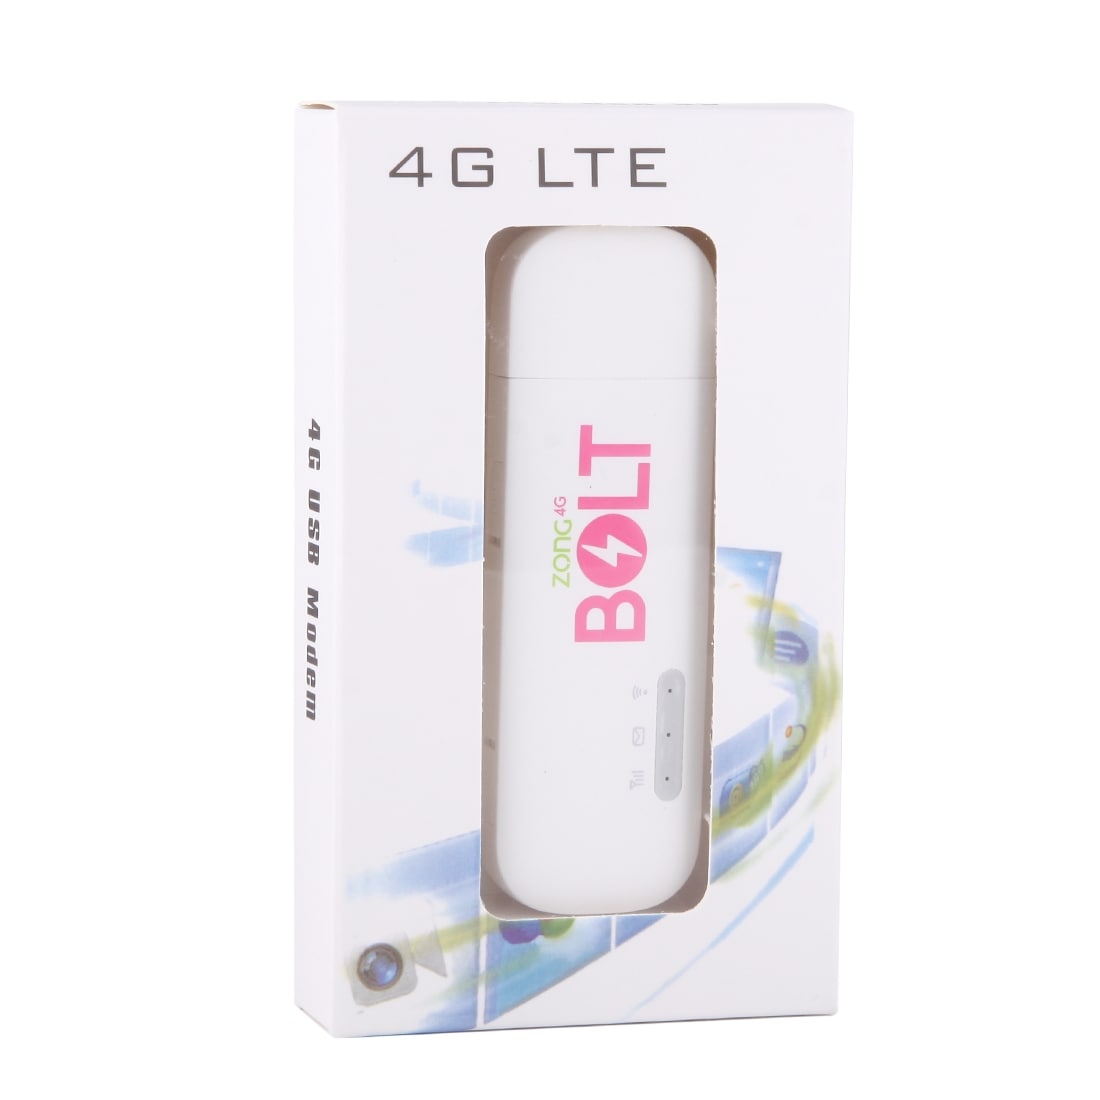 Huawei E8372 4G LTE 150Mbps WiFi USB Modem